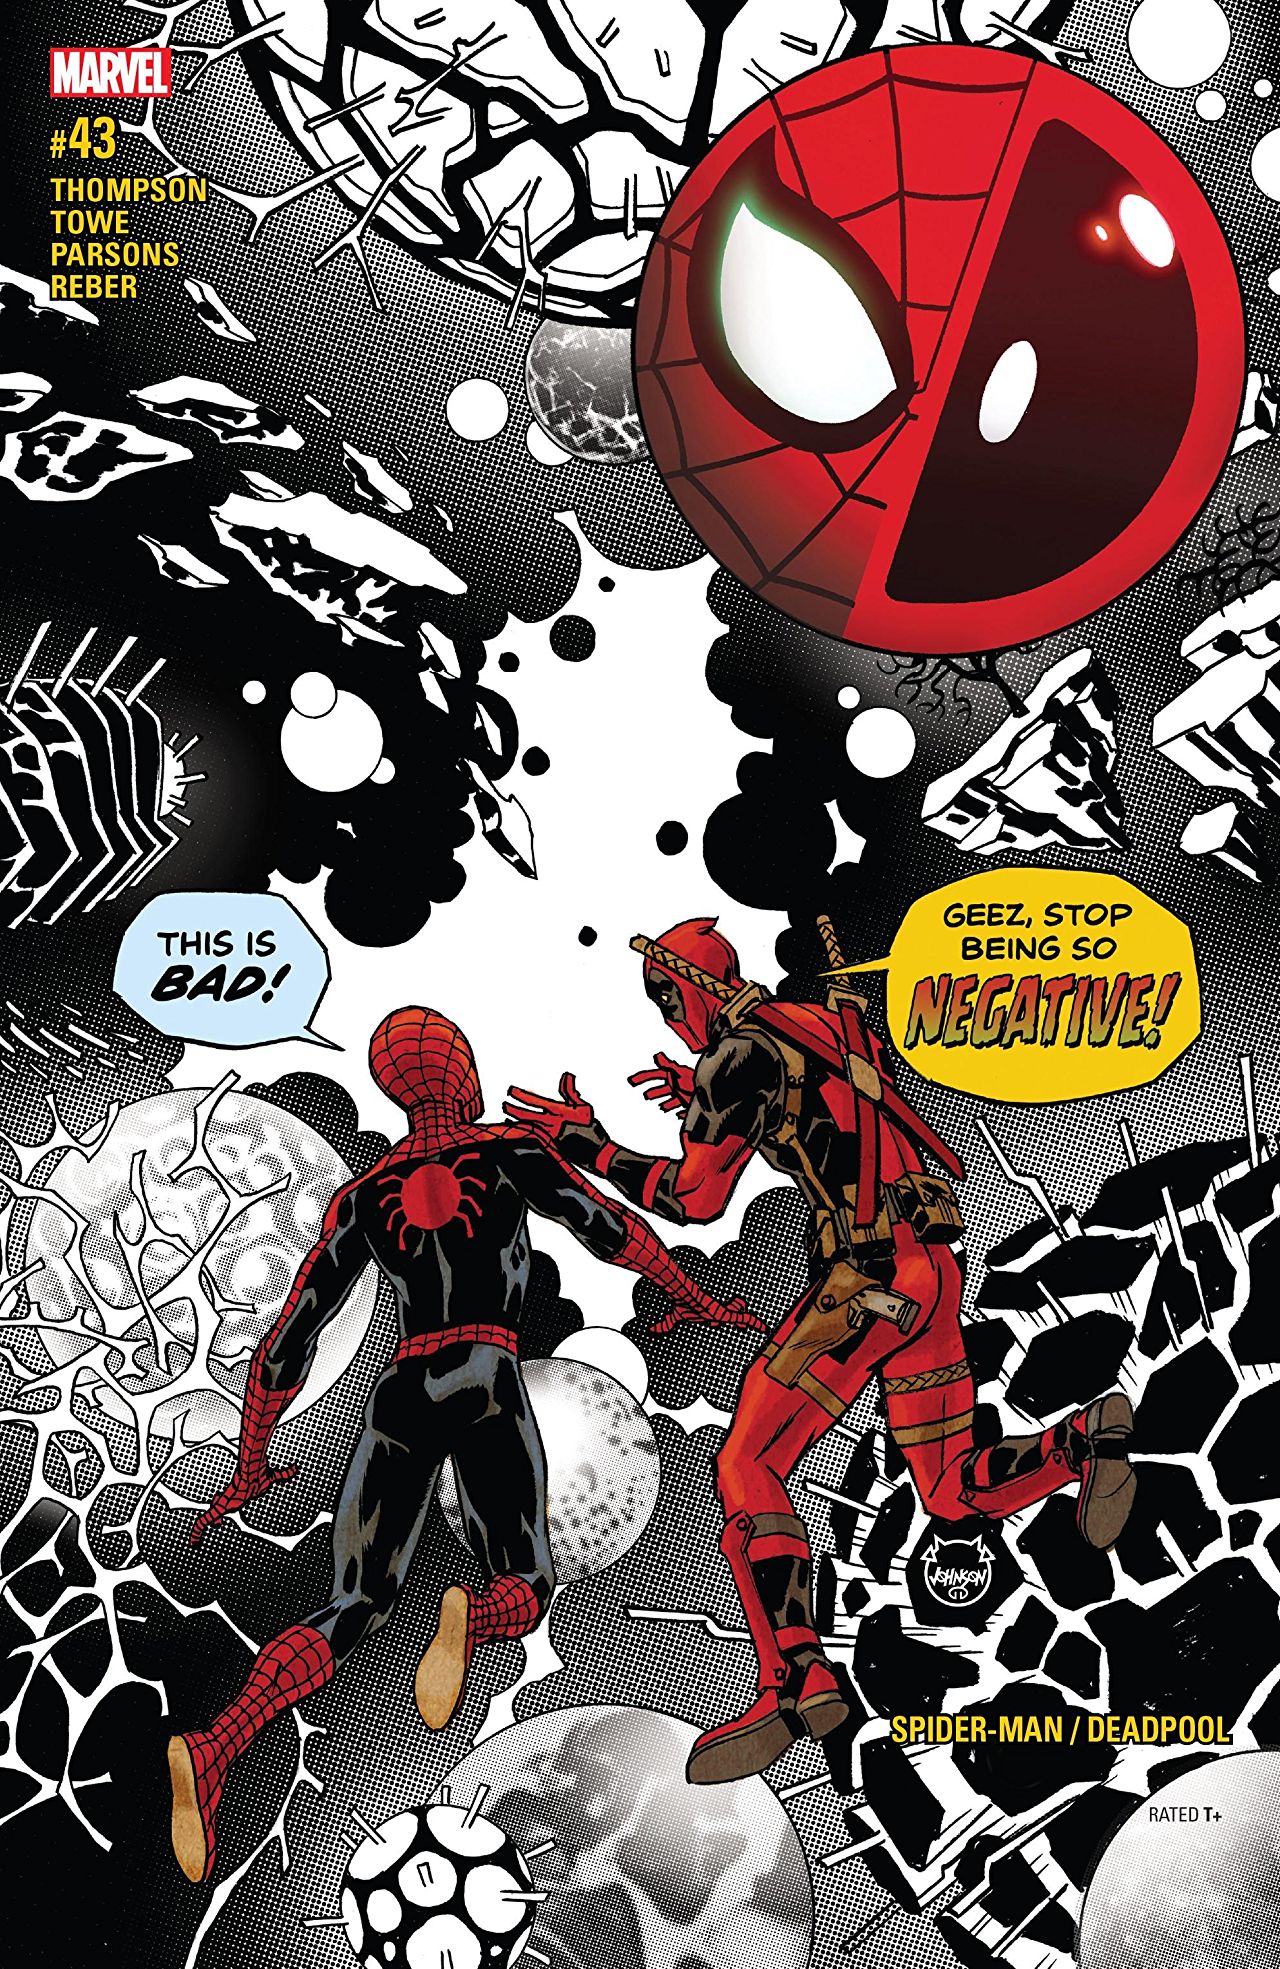 Marvel Preview: Spider-Man/Deadpool #43